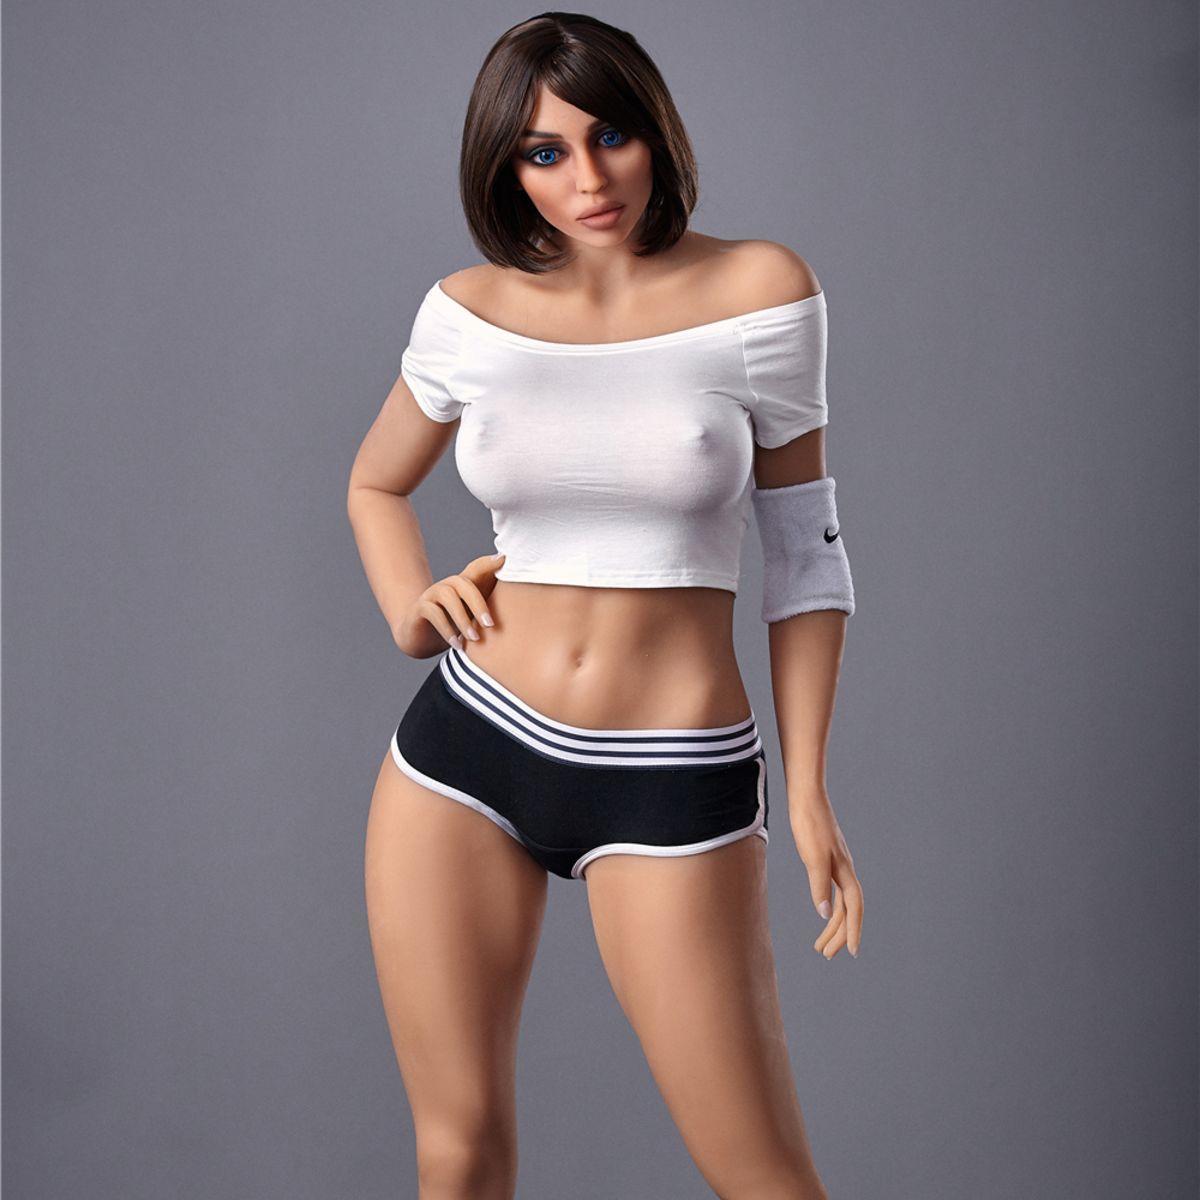 Neodoll Racy Natalia - Realistic Sex Doll - 159cm - Tan